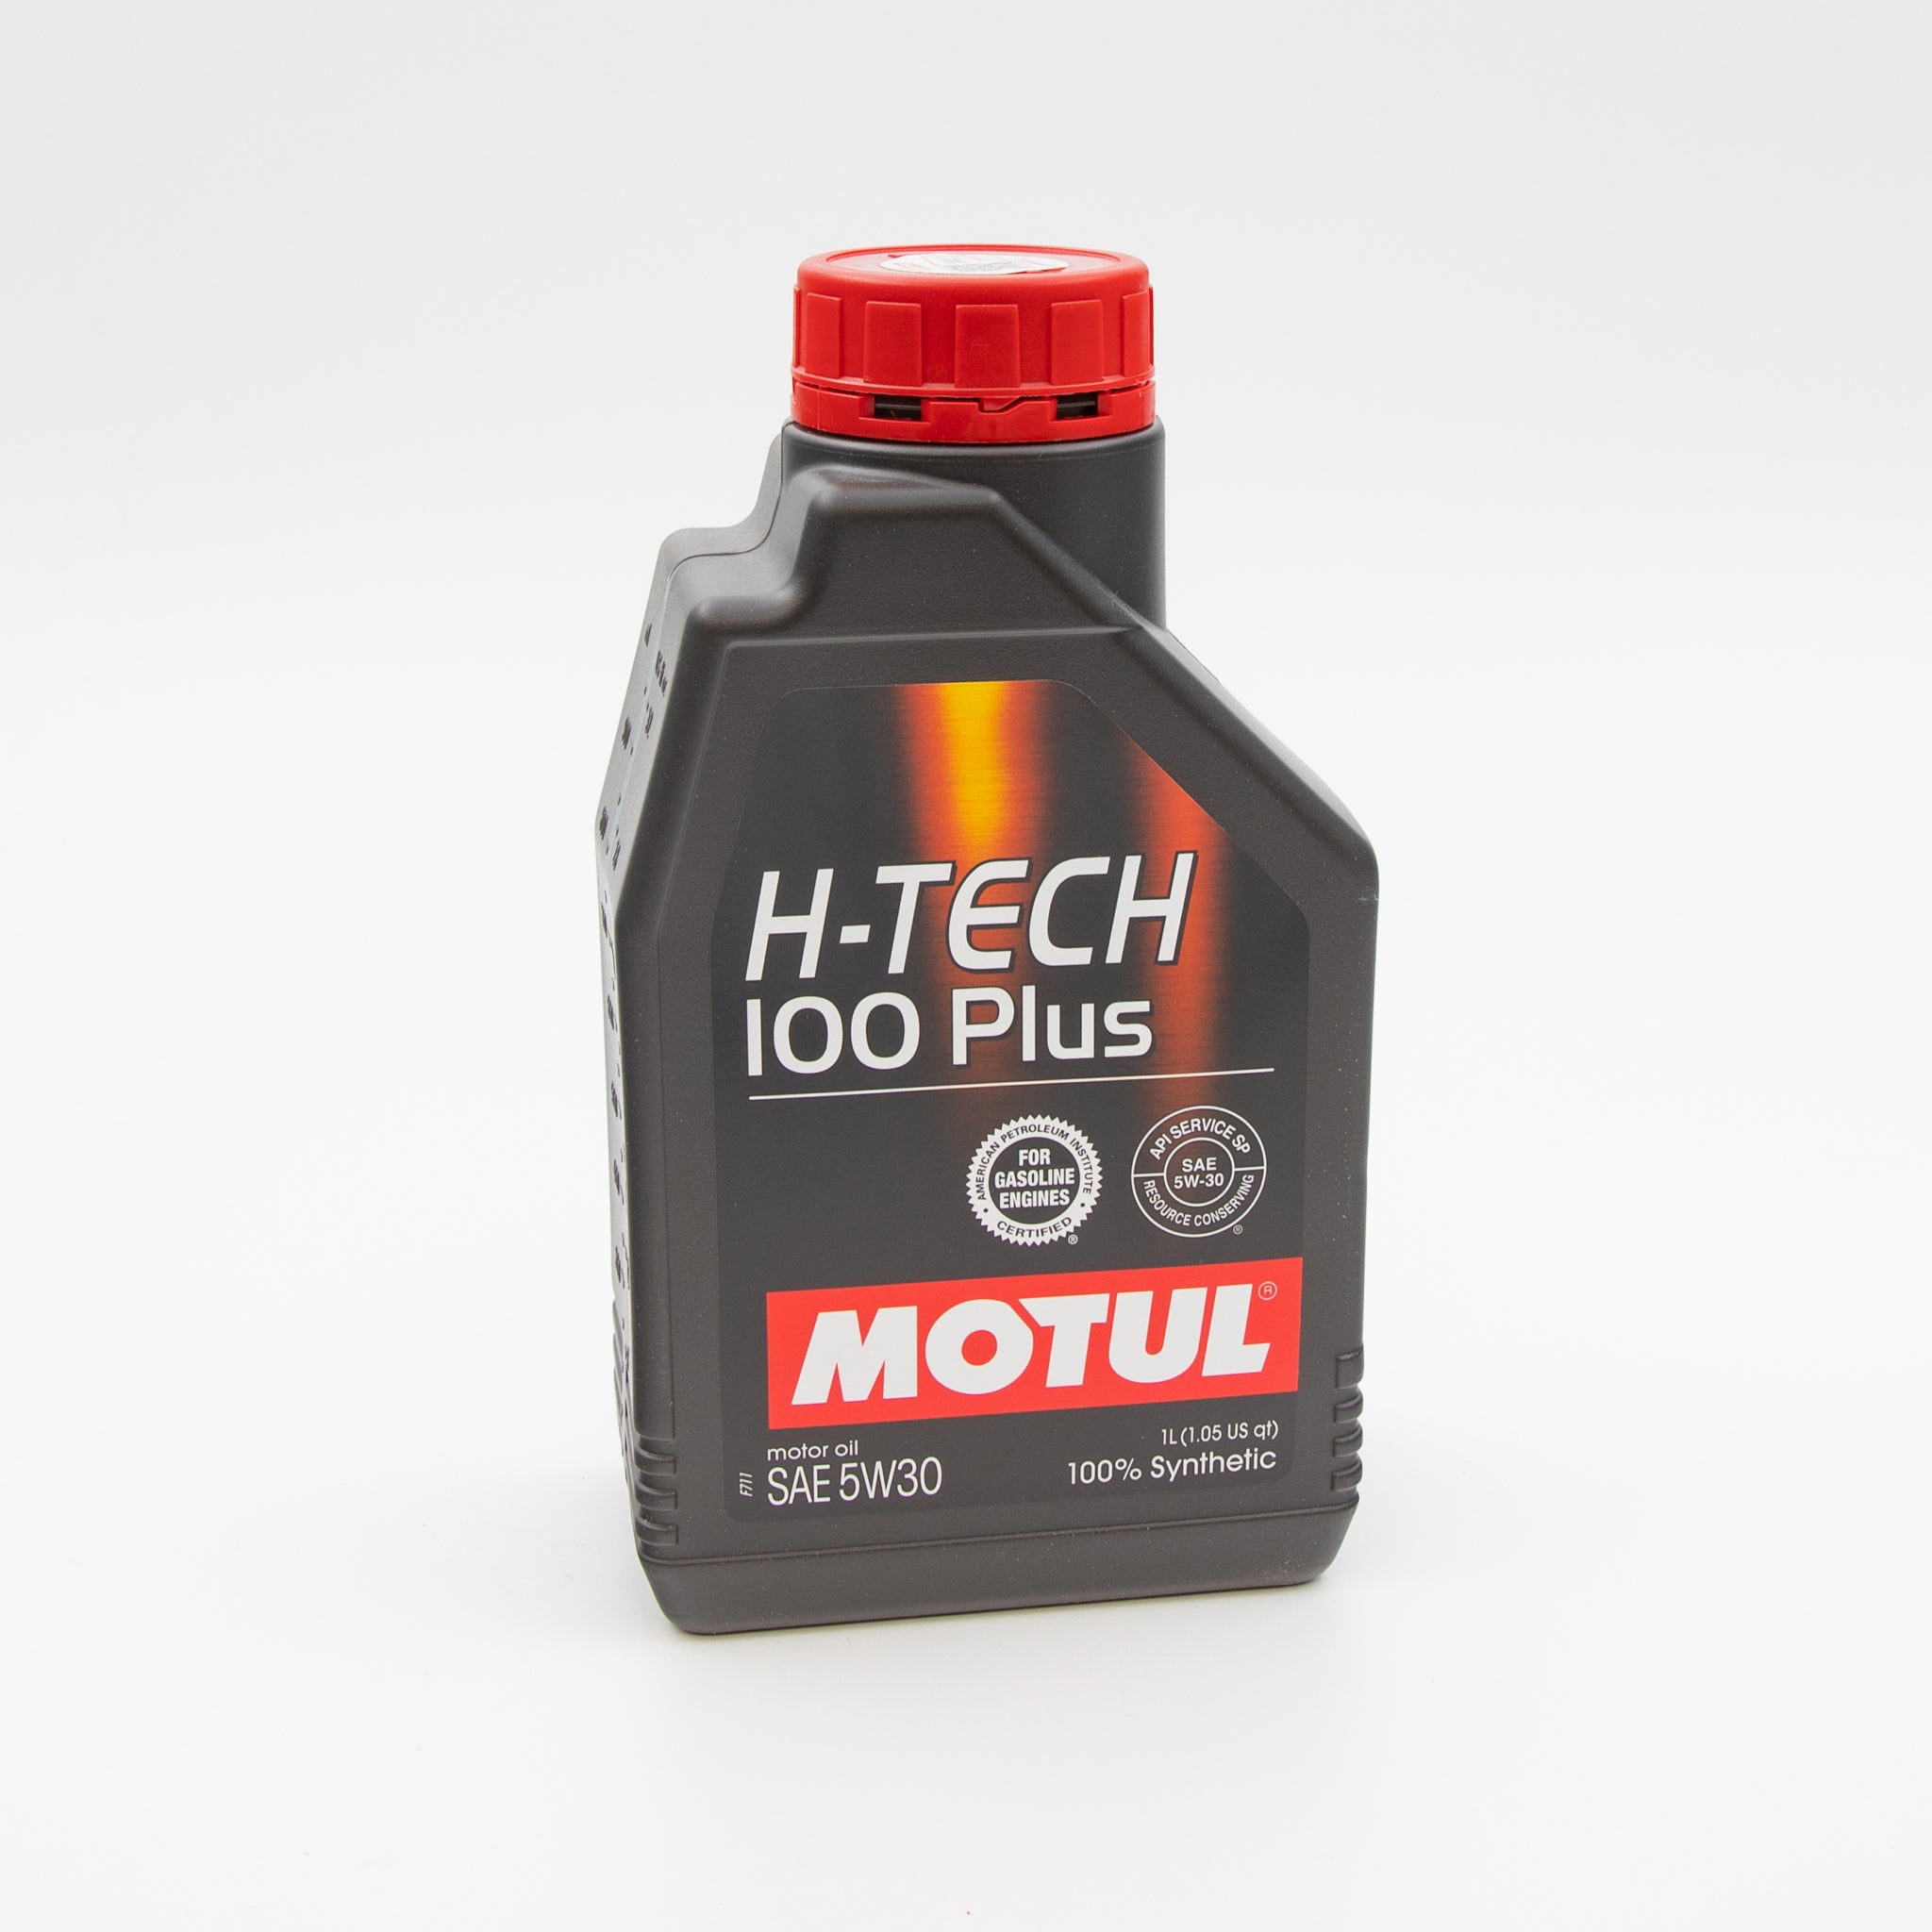 Motul H-Tech 100 Plus 5W30 - 1ltr